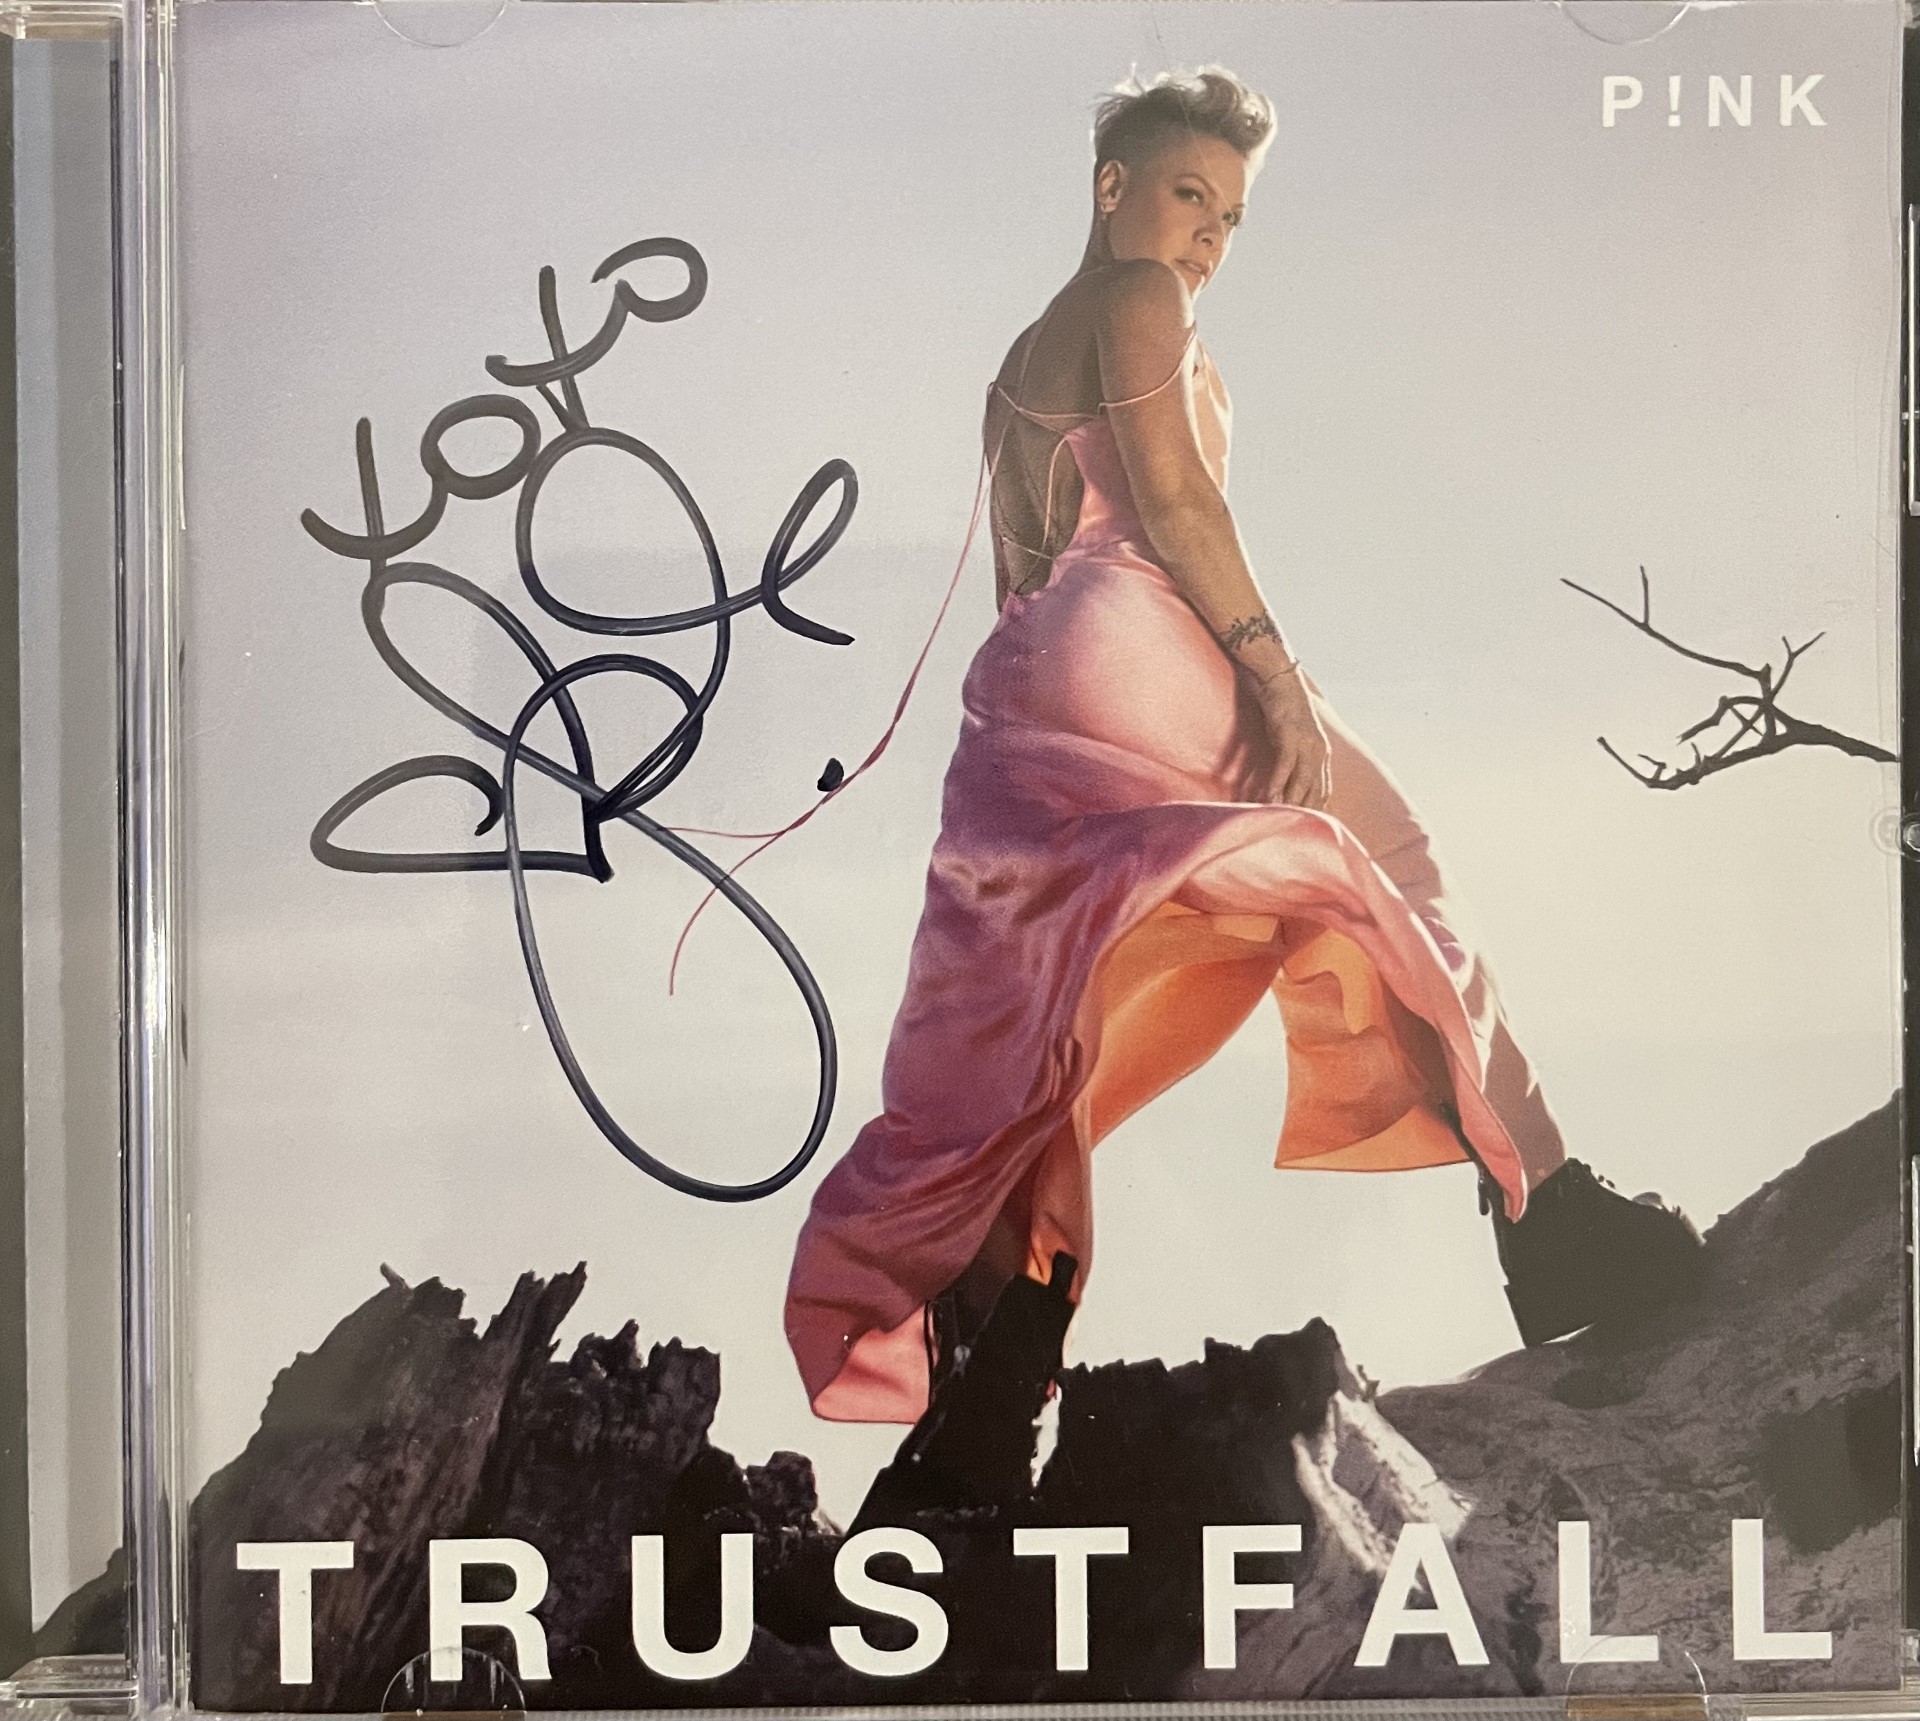 Pink signed CD